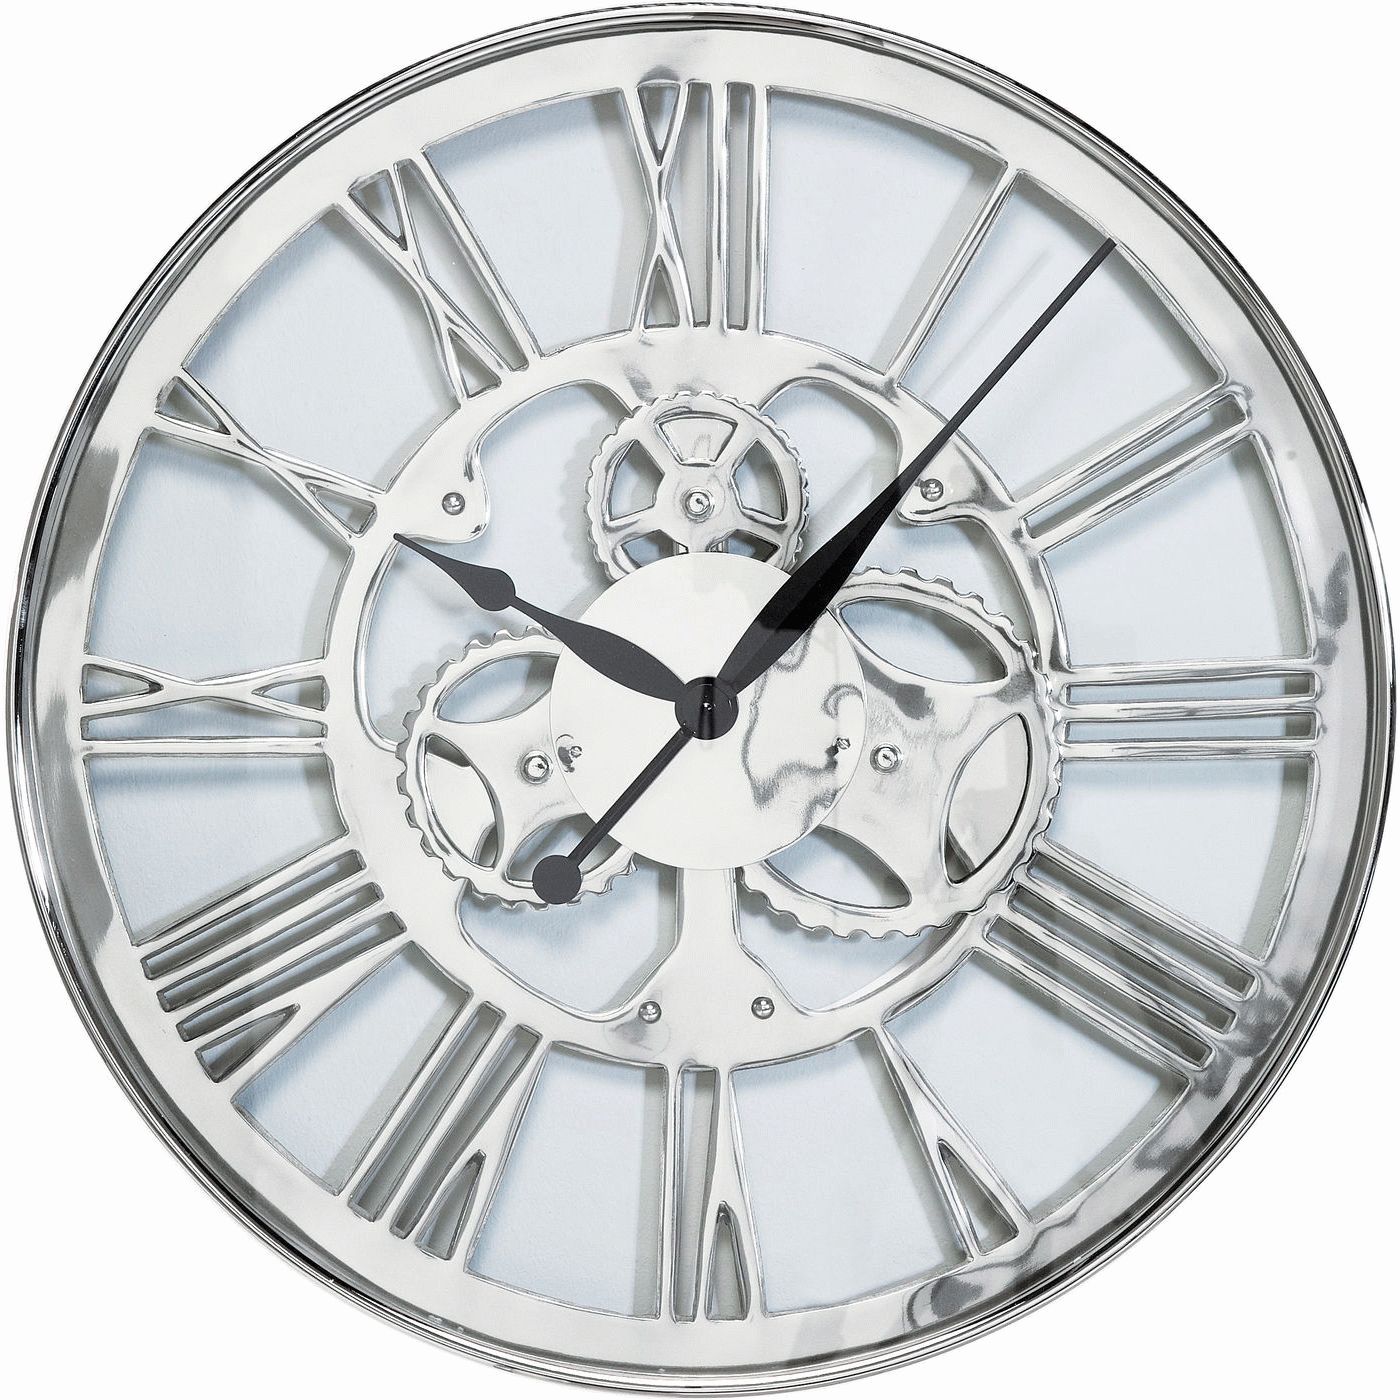 Часы настенные 60 см. Настенные часы Kare Gear. Часы Kare Design. Часы настенные металлические. Часы настенные хромированные.